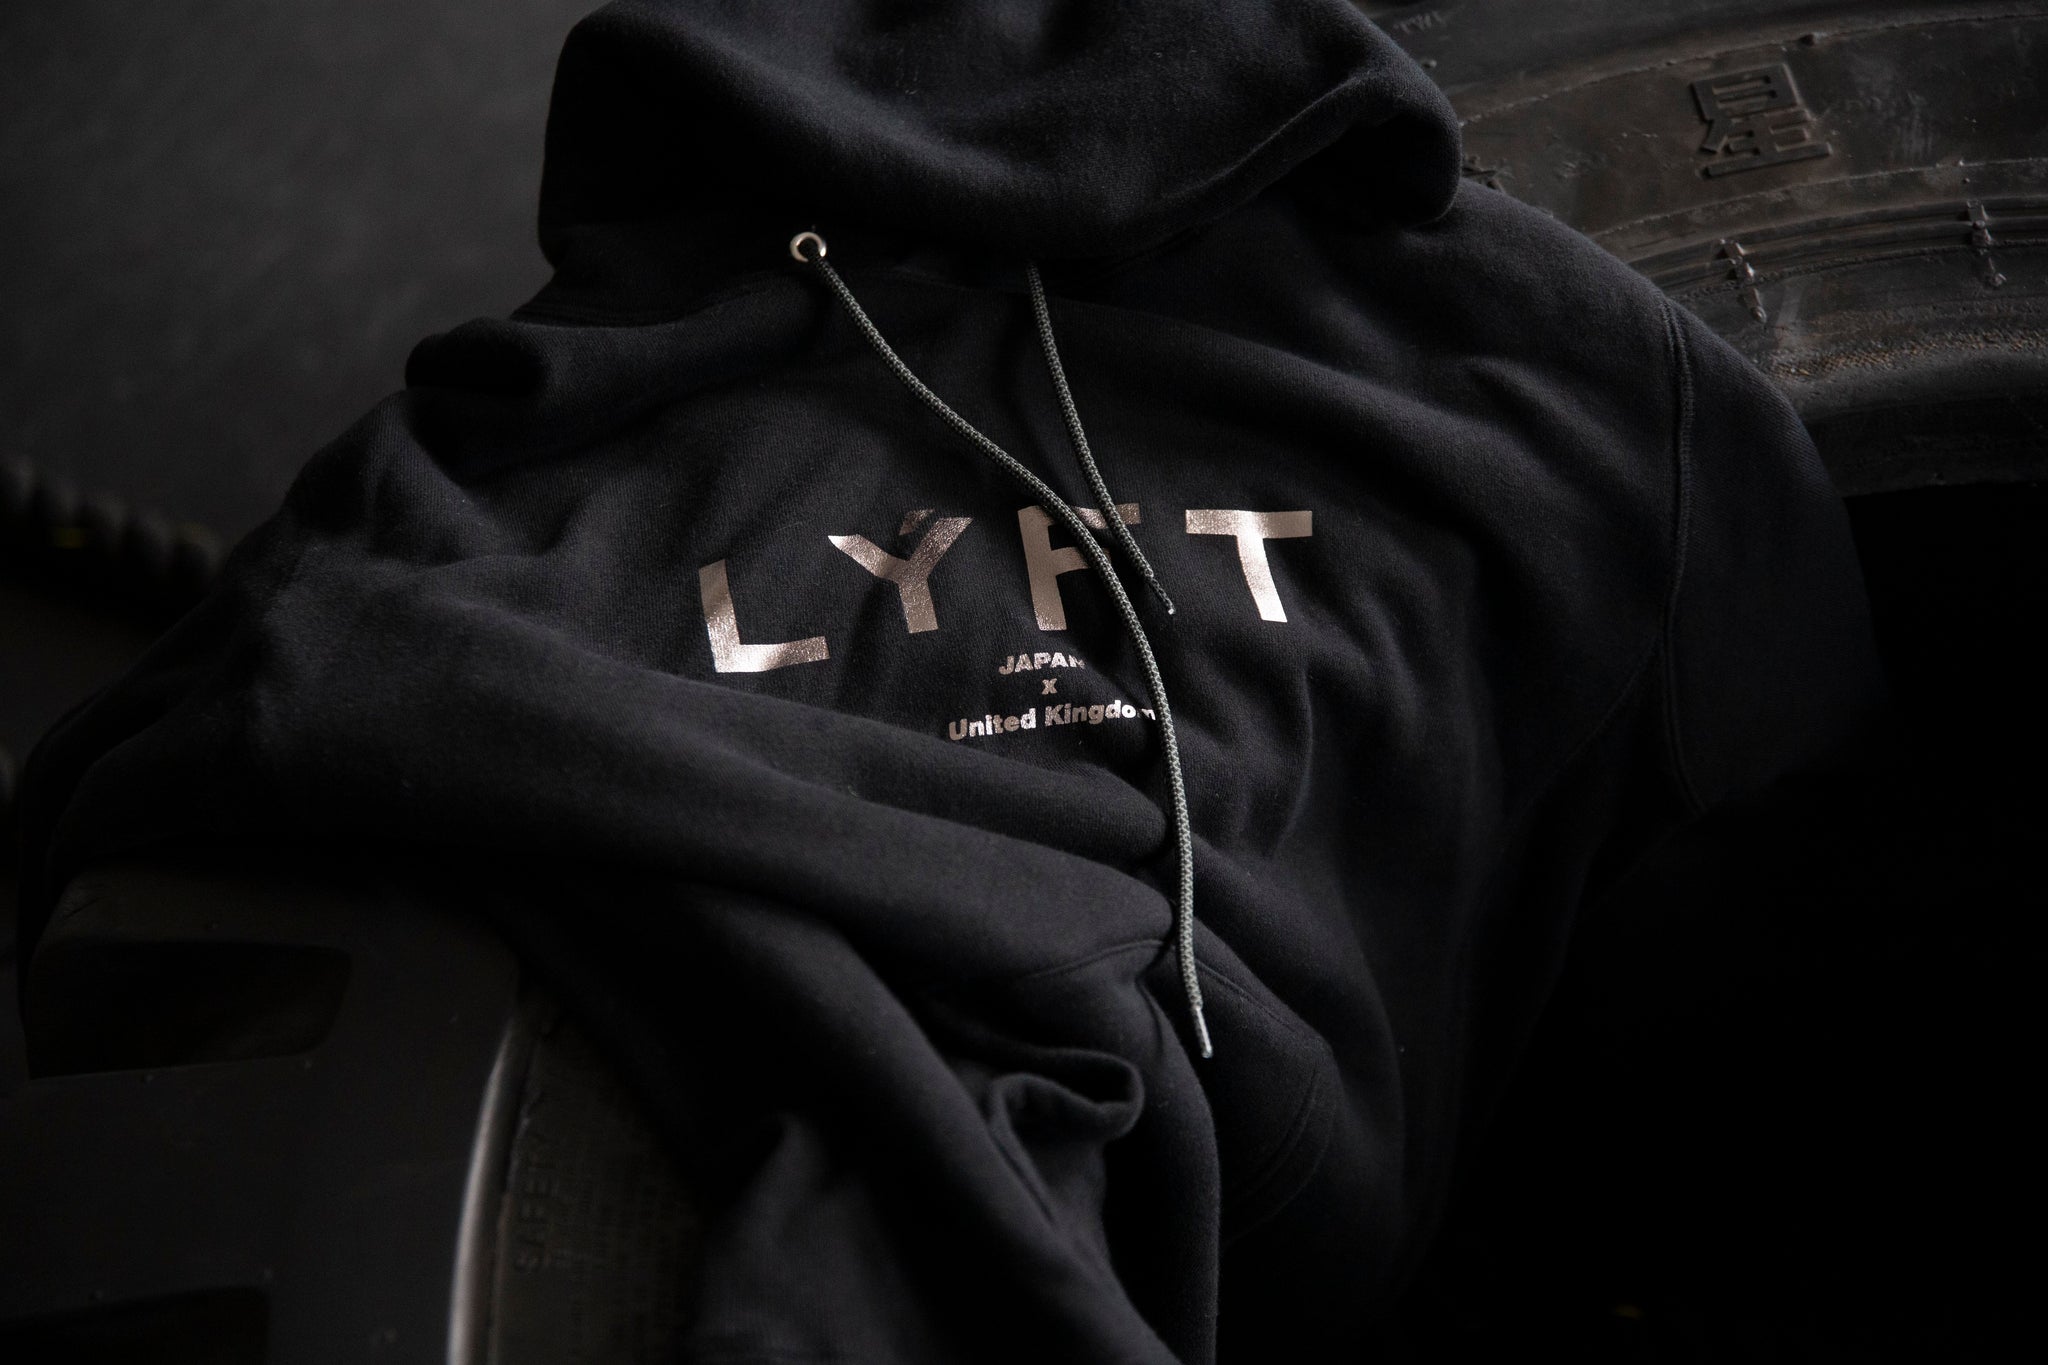 LYFT pullover